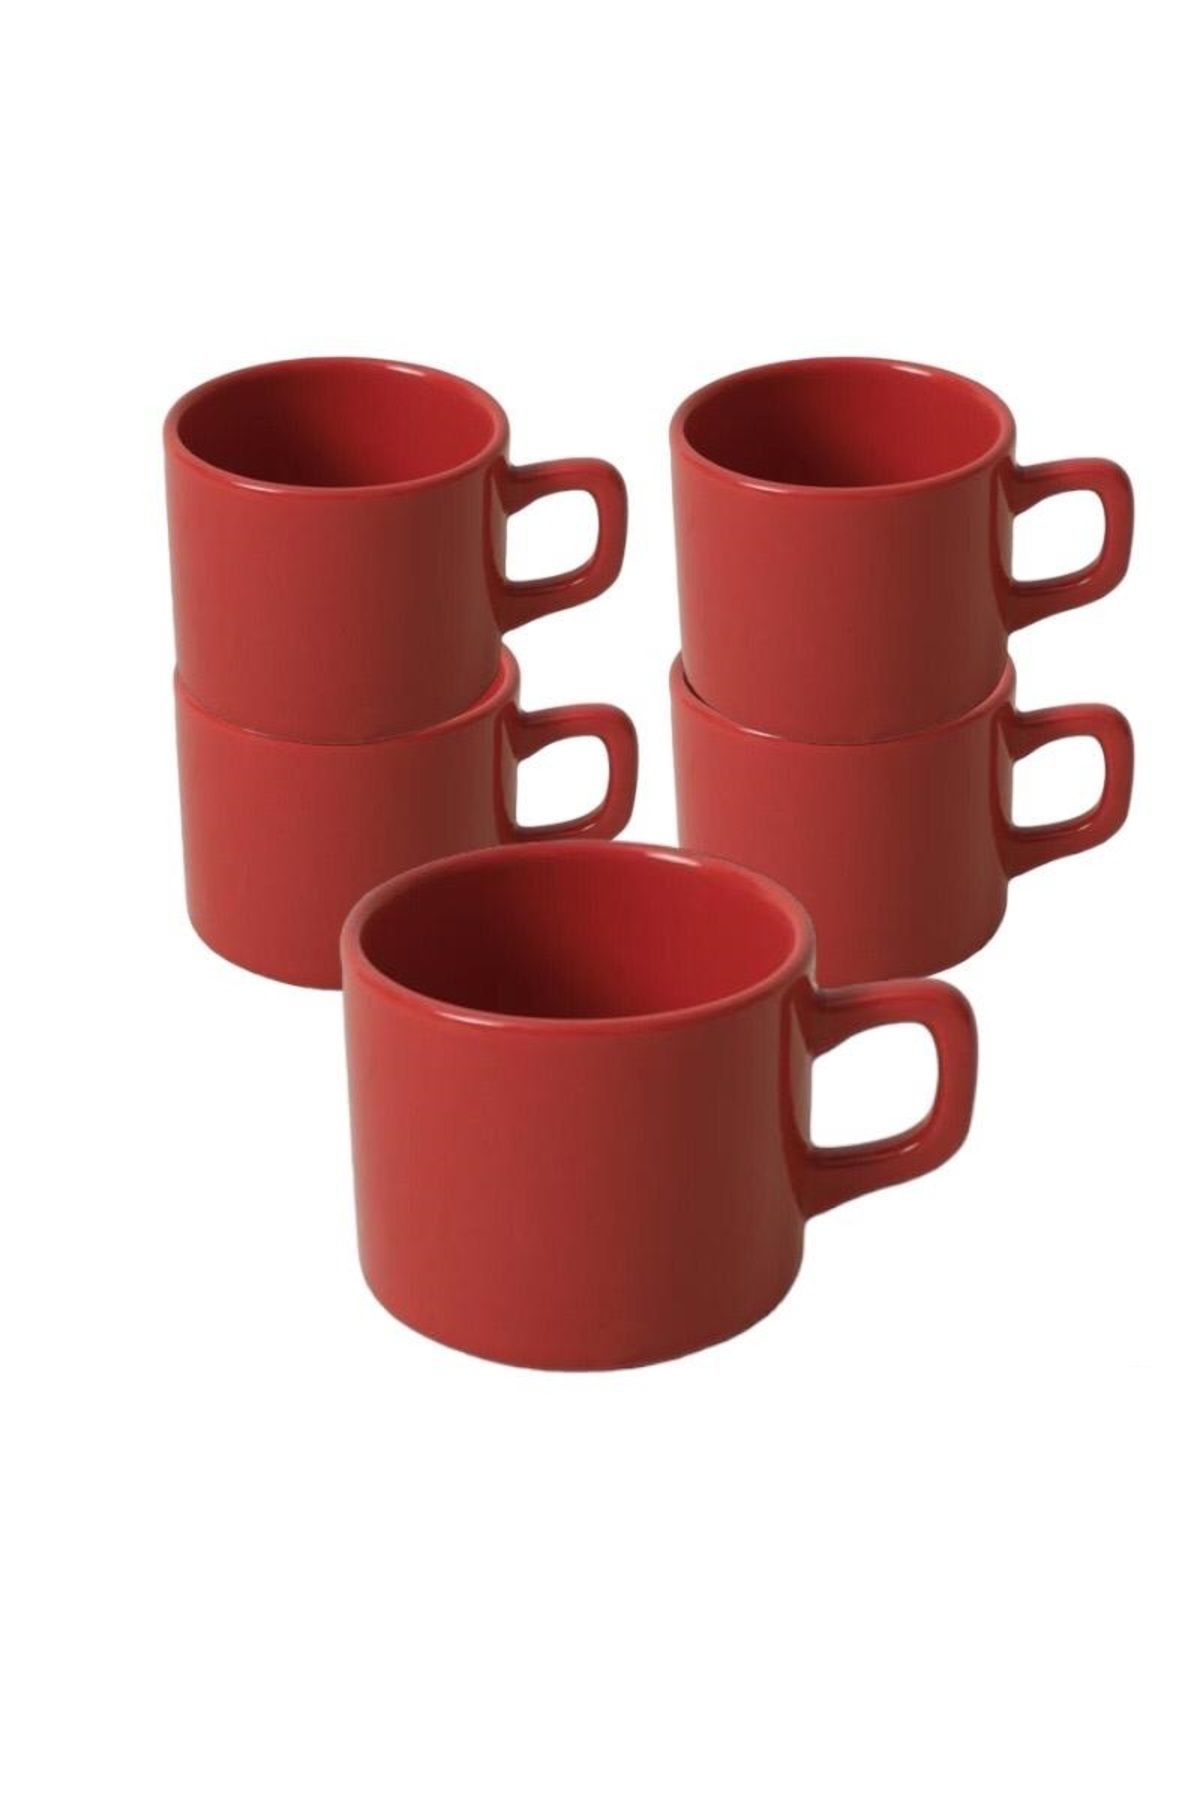 Keramika 8 Cm Stackable Çay/nescafe Fincanı Kırmızı 6 Adet